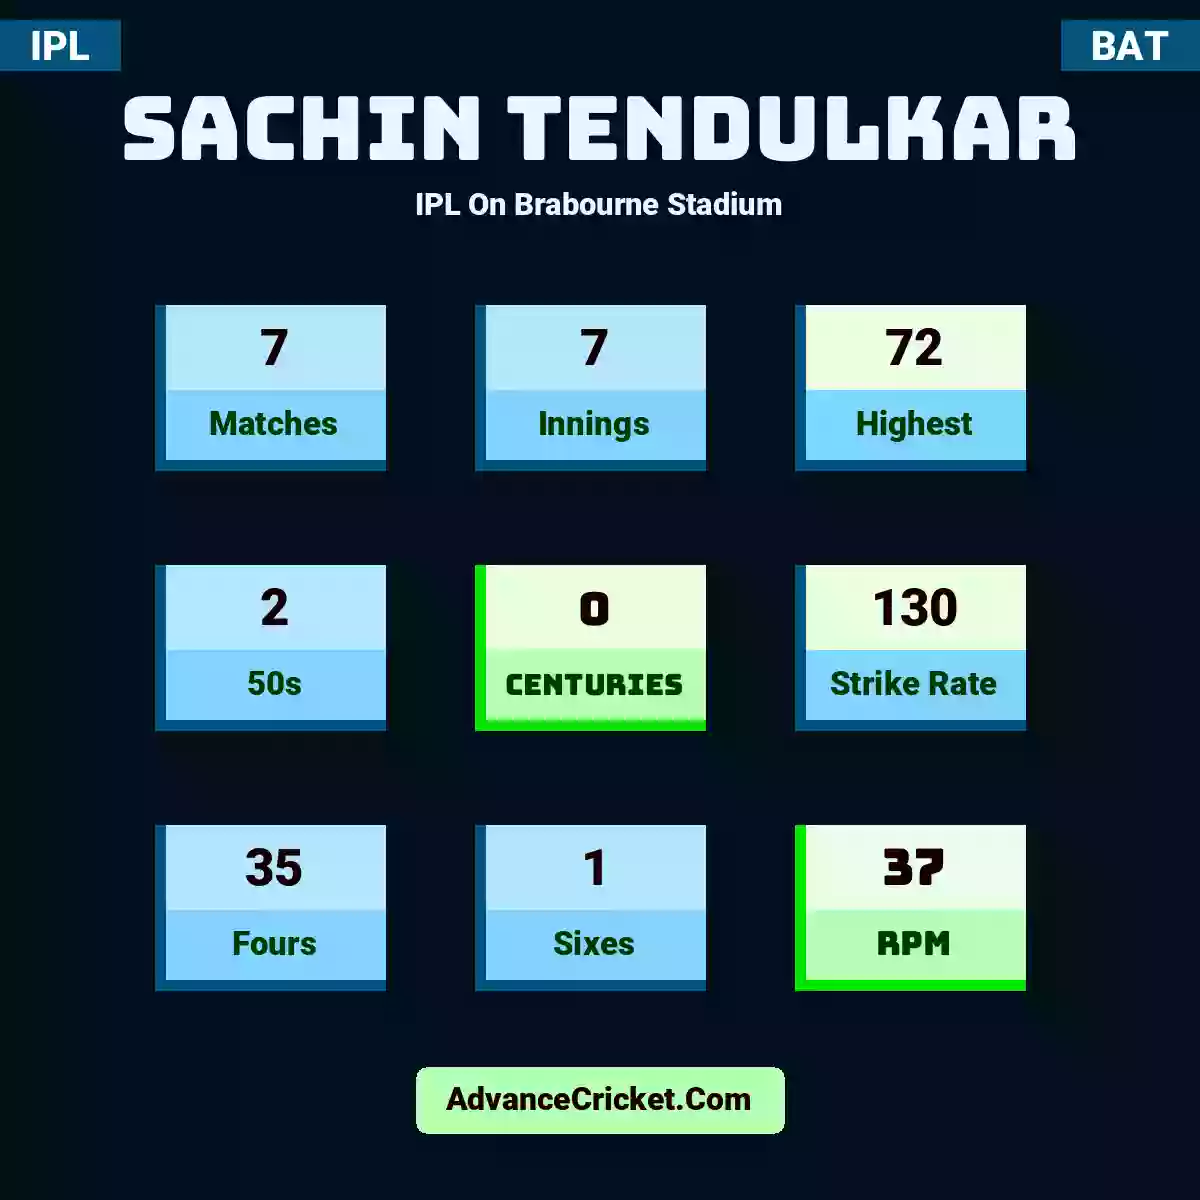 Sachin Tendulkar IPL  On Brabourne Stadium, Sachin Tendulkar played 7 matches, scored 72 runs as highest, 2 half-centuries, and 0 centuries, with a strike rate of 130. S.Tendulkar hit 35 fours and 1 sixes, with an RPM of 37.